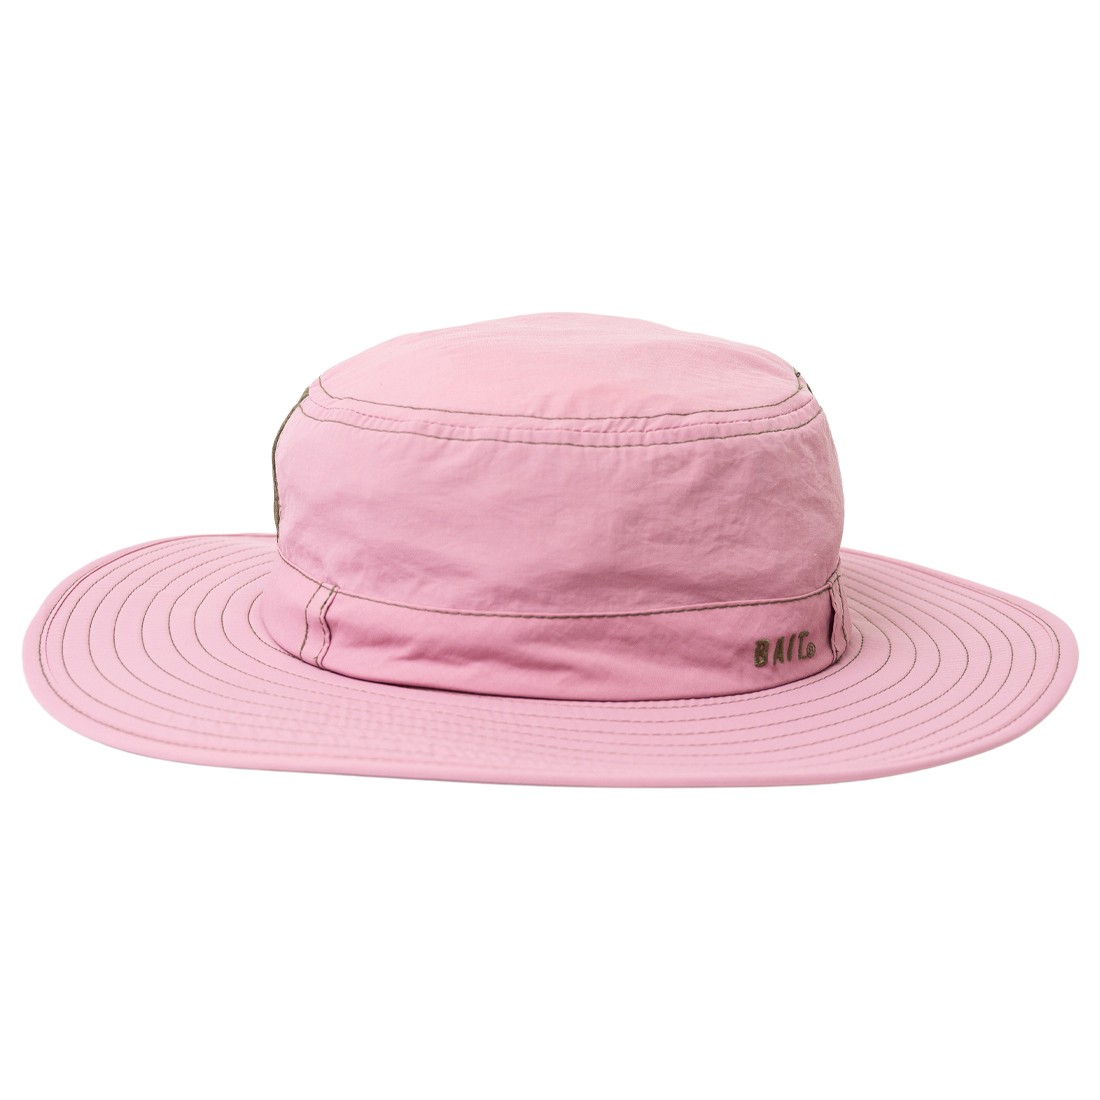 Bait Fishing Bucket Cap (Pink)